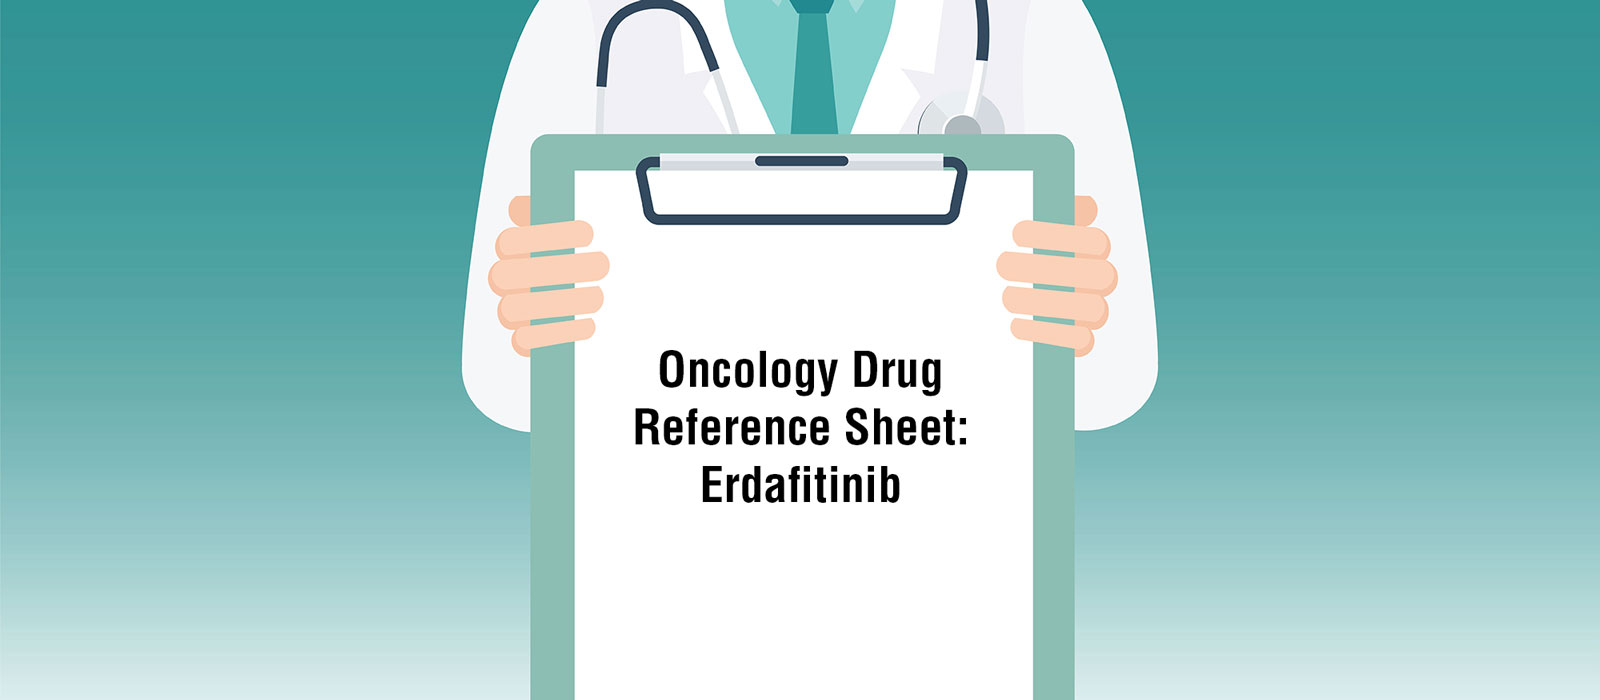 Oncology Drug Reference Sheet: Erdafitinib